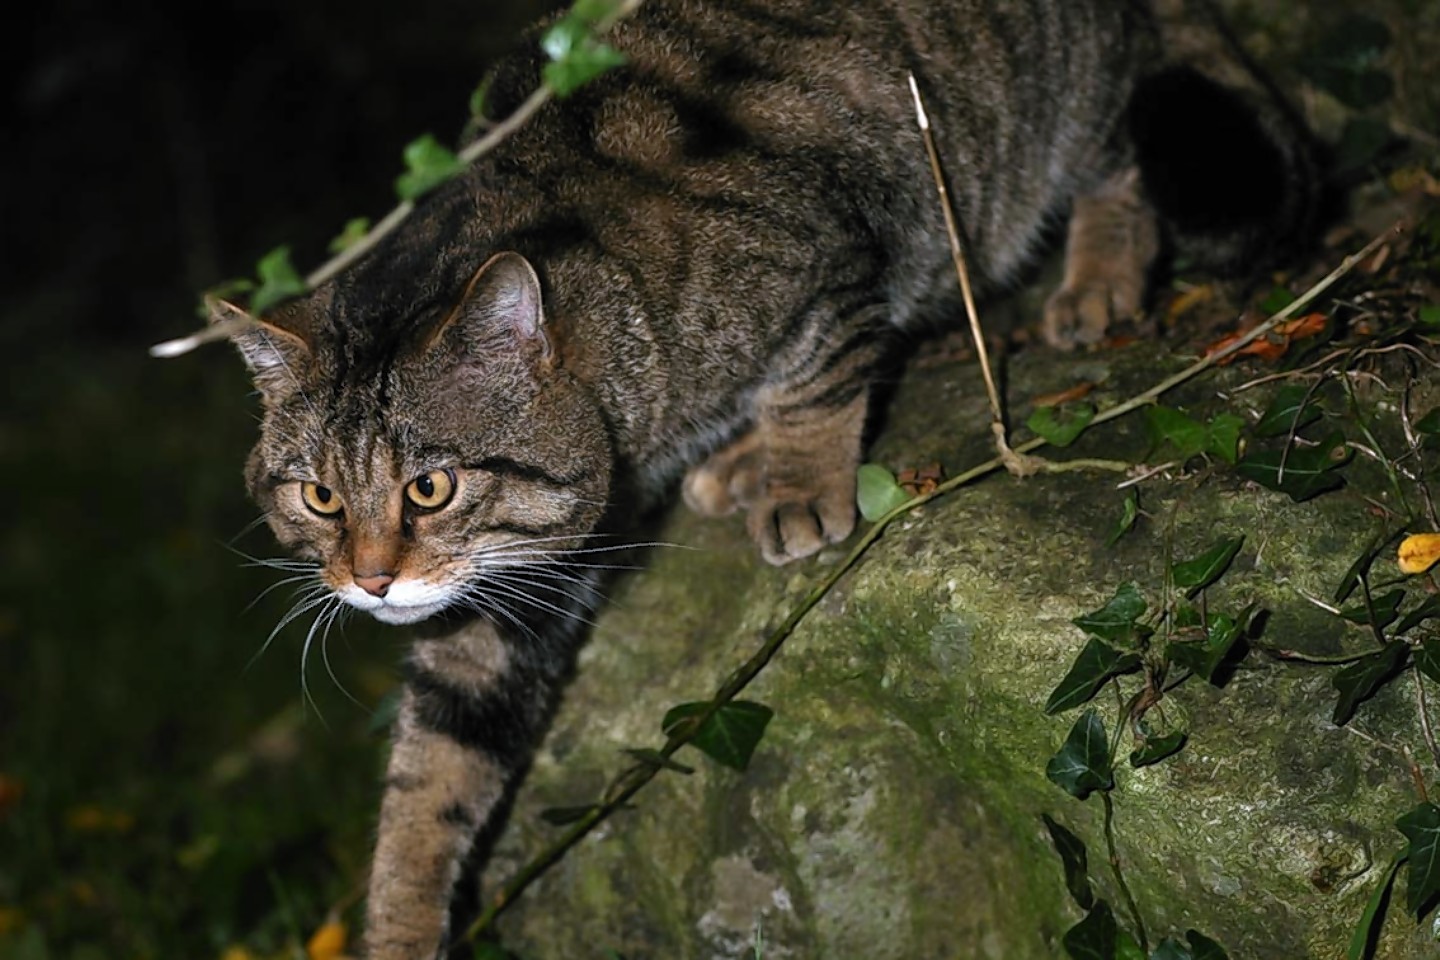 The Scottish wildcat